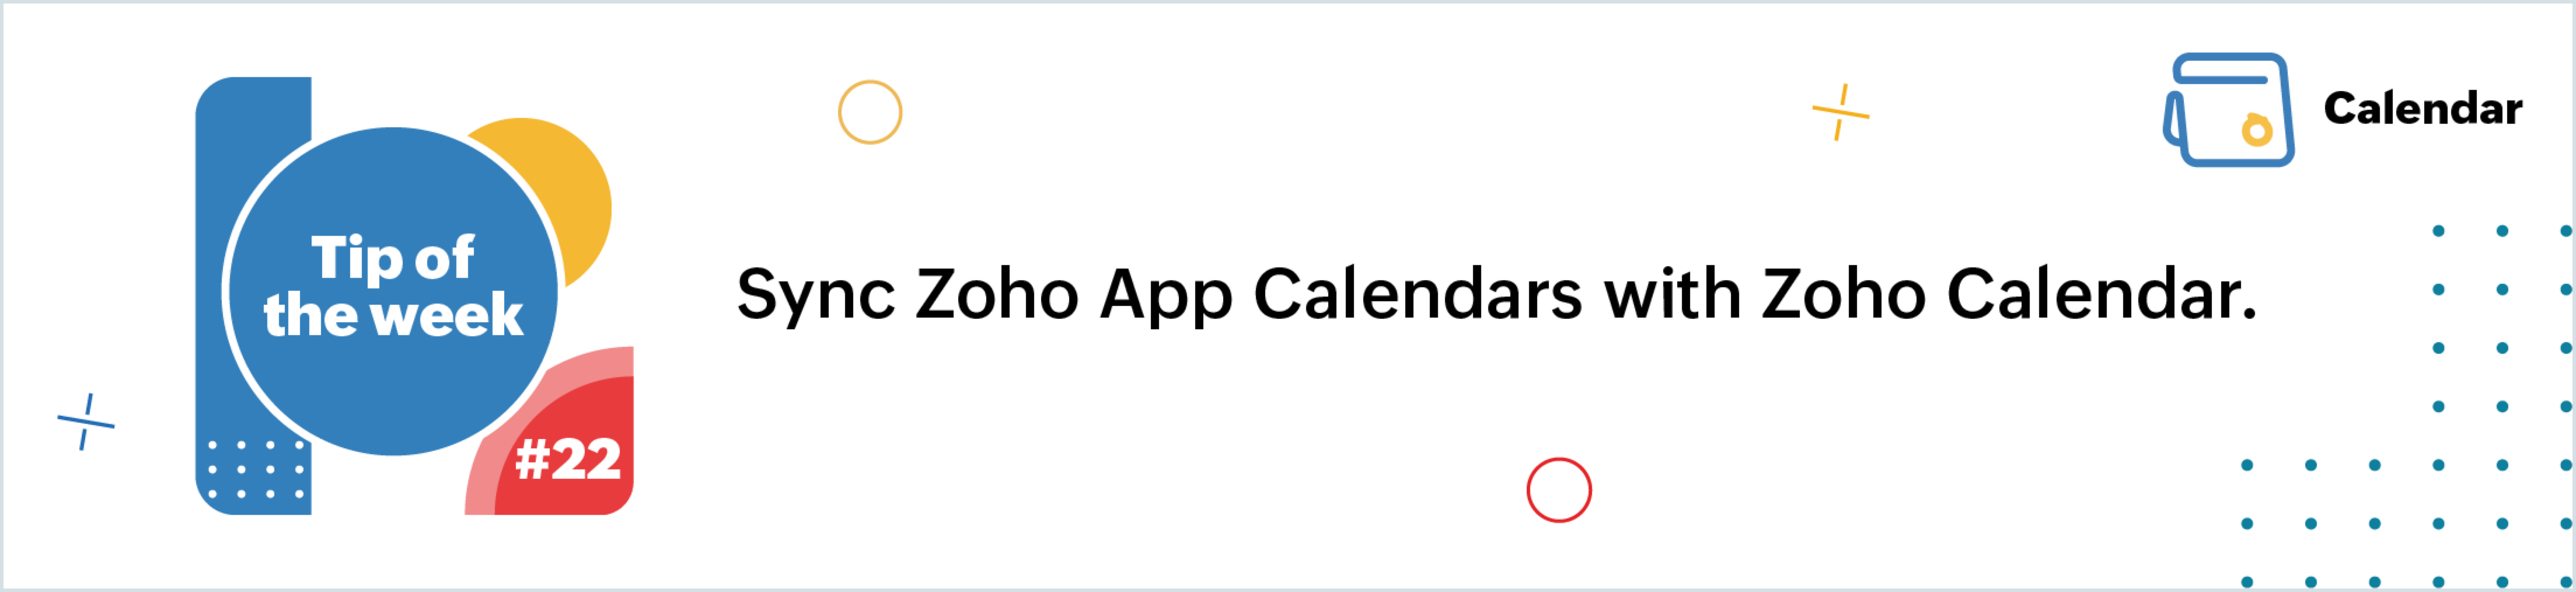 Tip of the week 22 Sync Zoho App Calendars with Zoho Calendar.